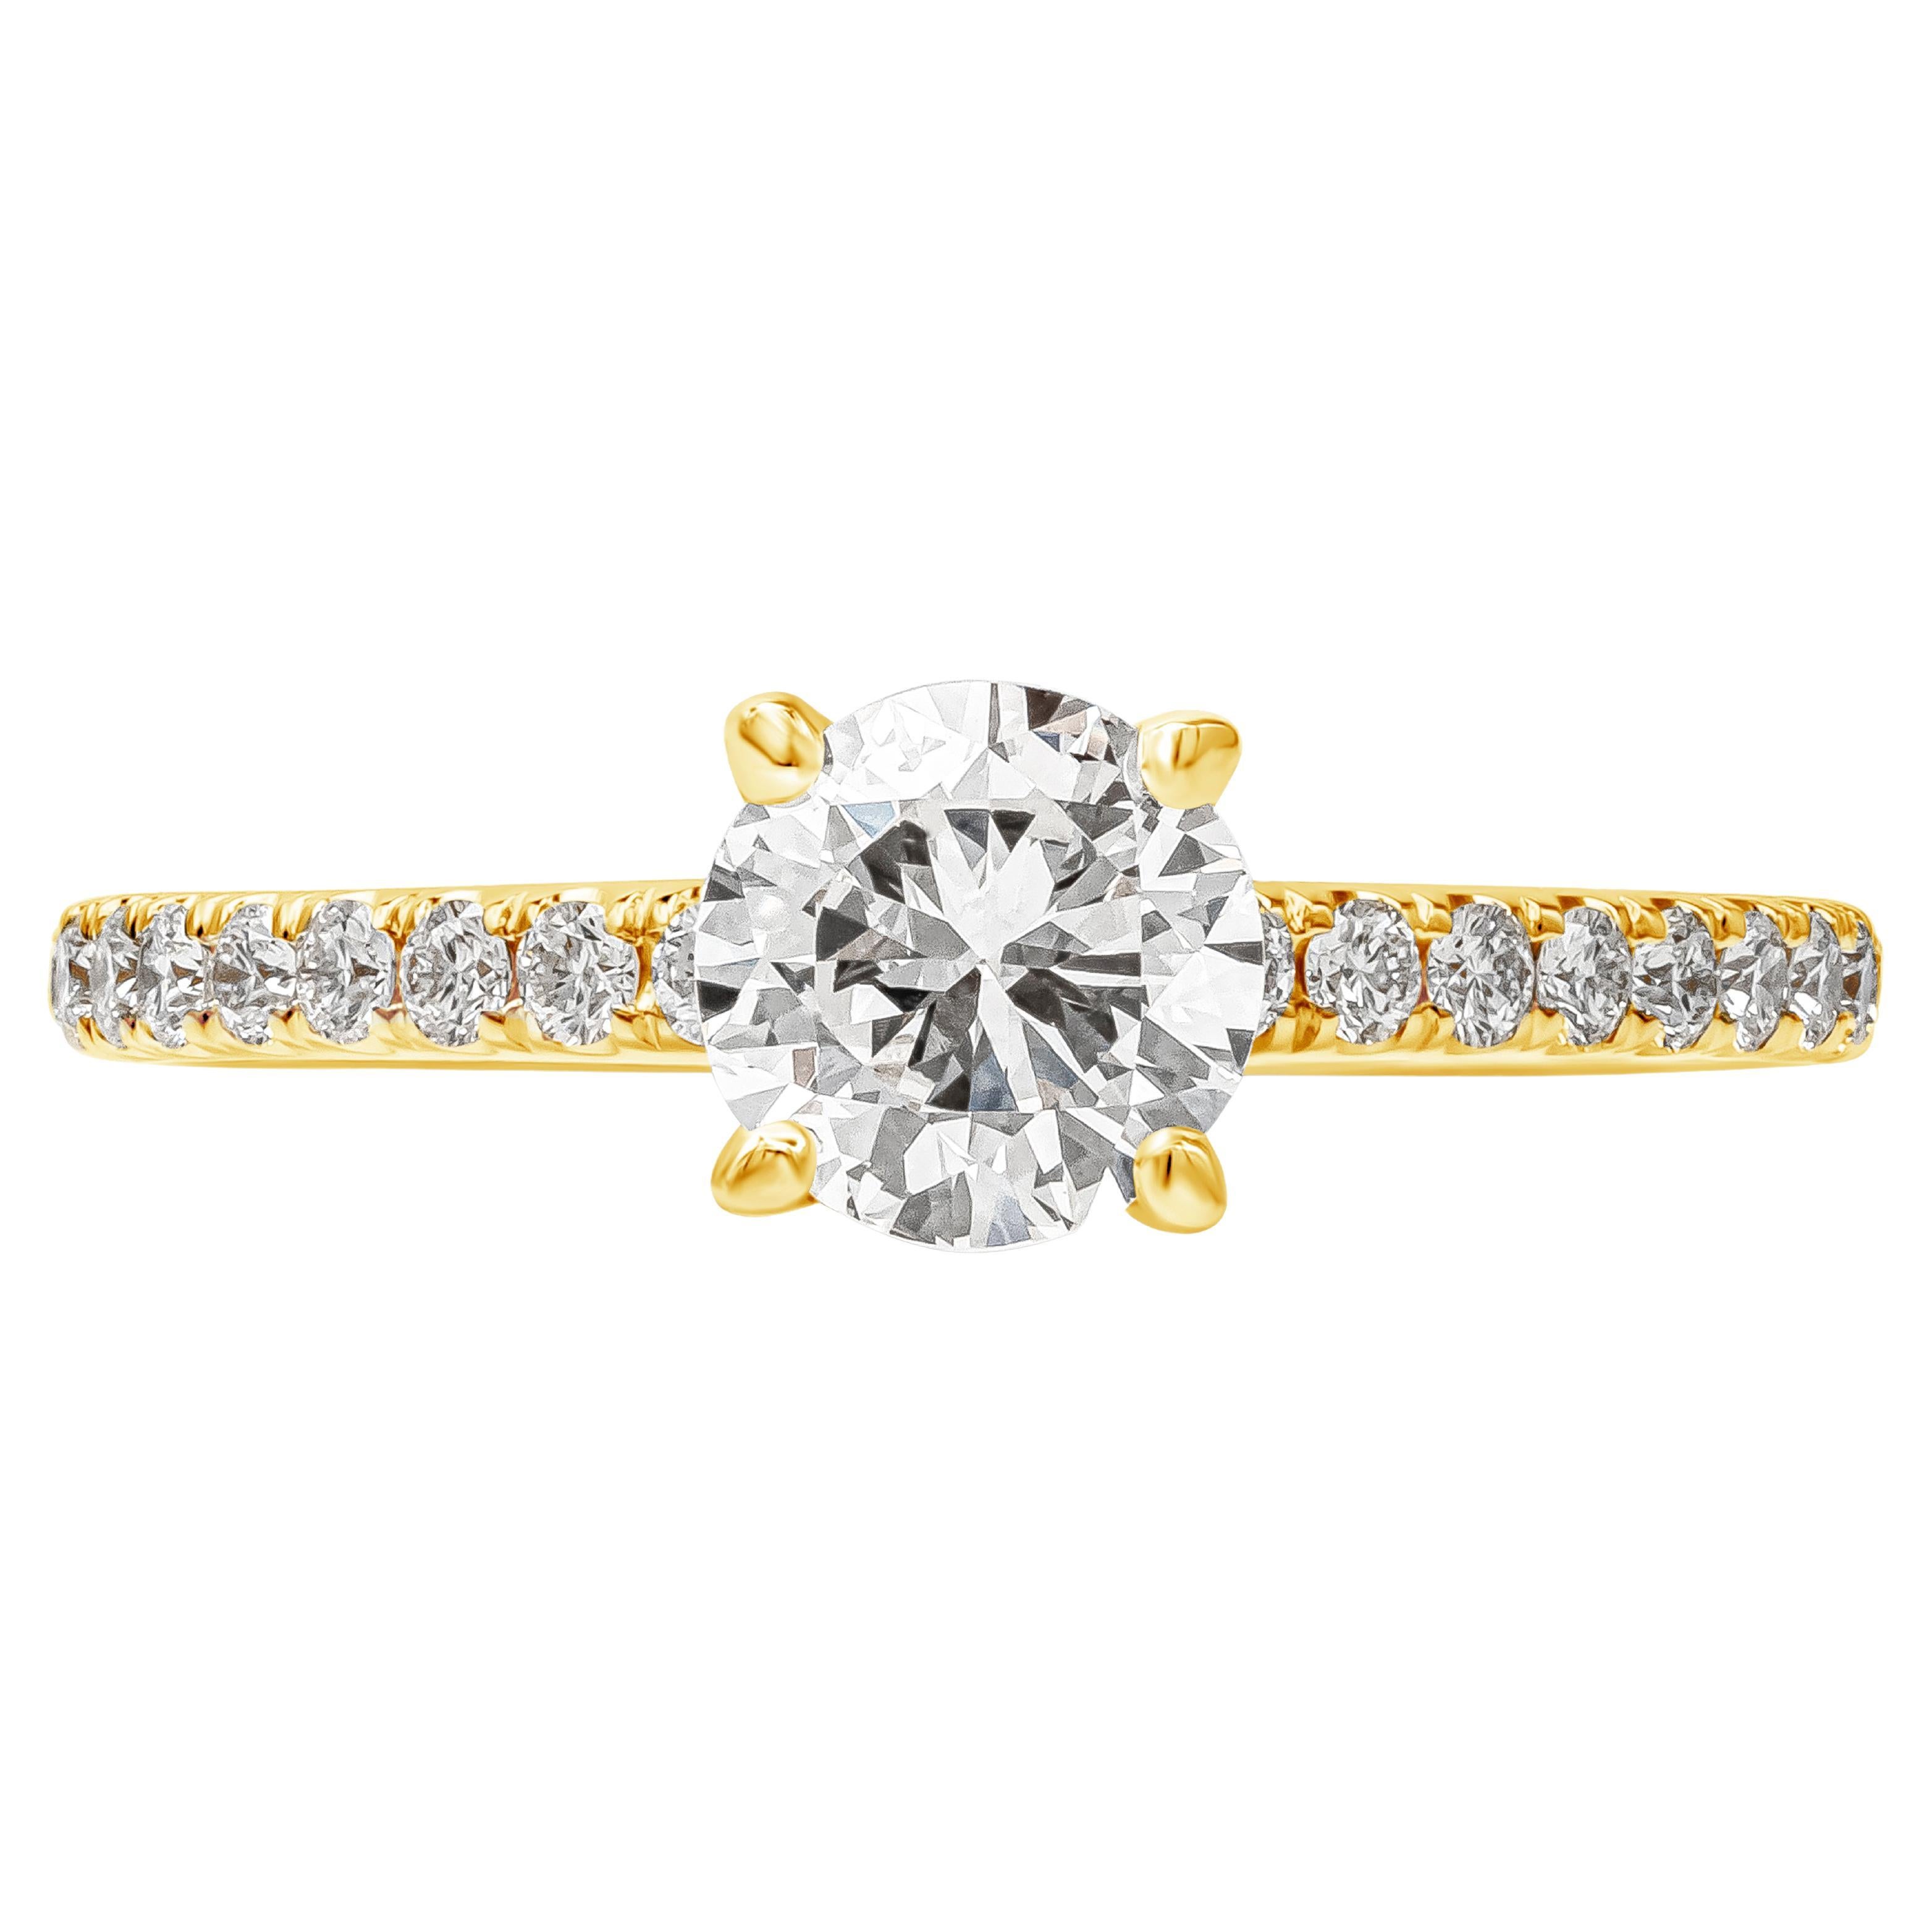 Anillo de compromiso con pavé de diamantes talla redonda brillante de 0,73 quilates certificado por el GIA 